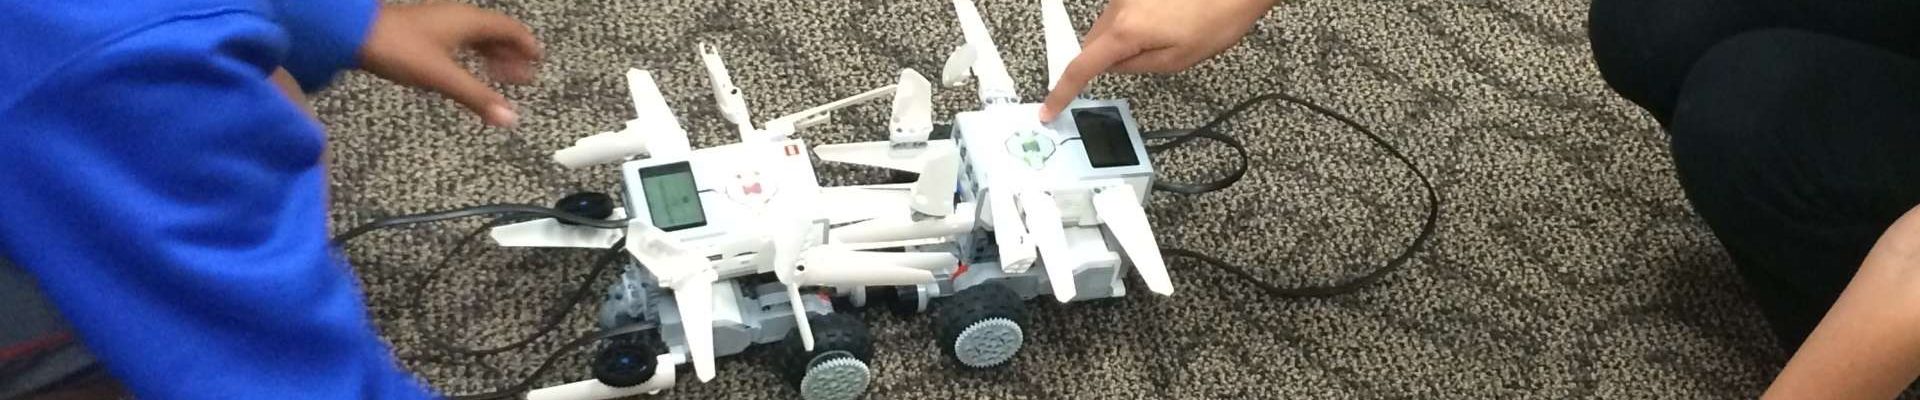 Two robots fighting during EV3 LEGO Robotics Camp.